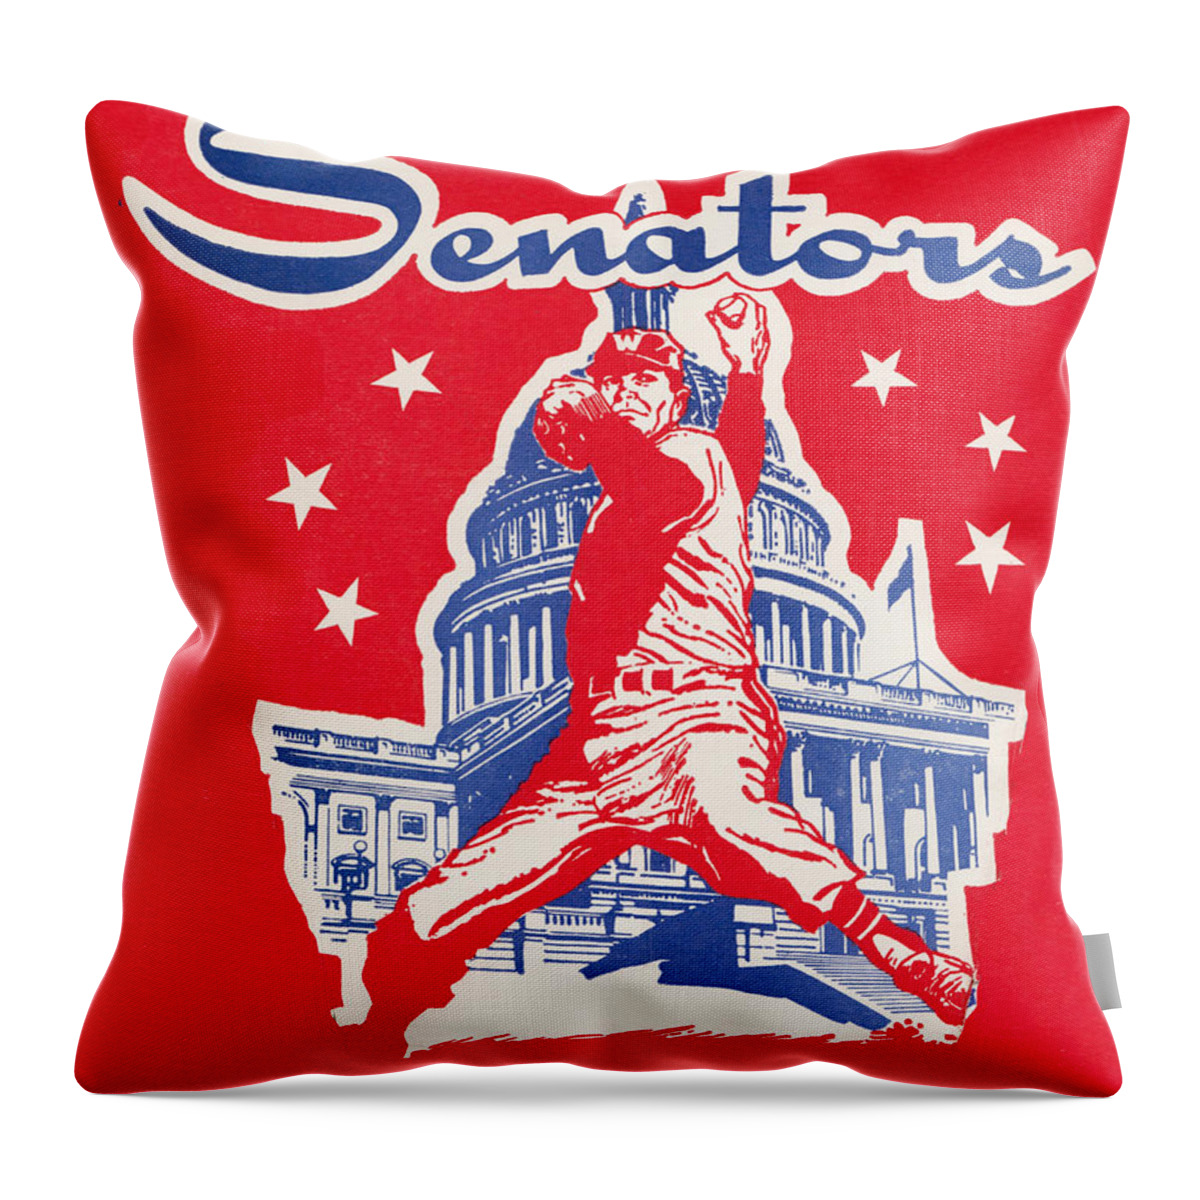 1962 Washington Senators Throw Pillow by Row One Brand - Fine Art America